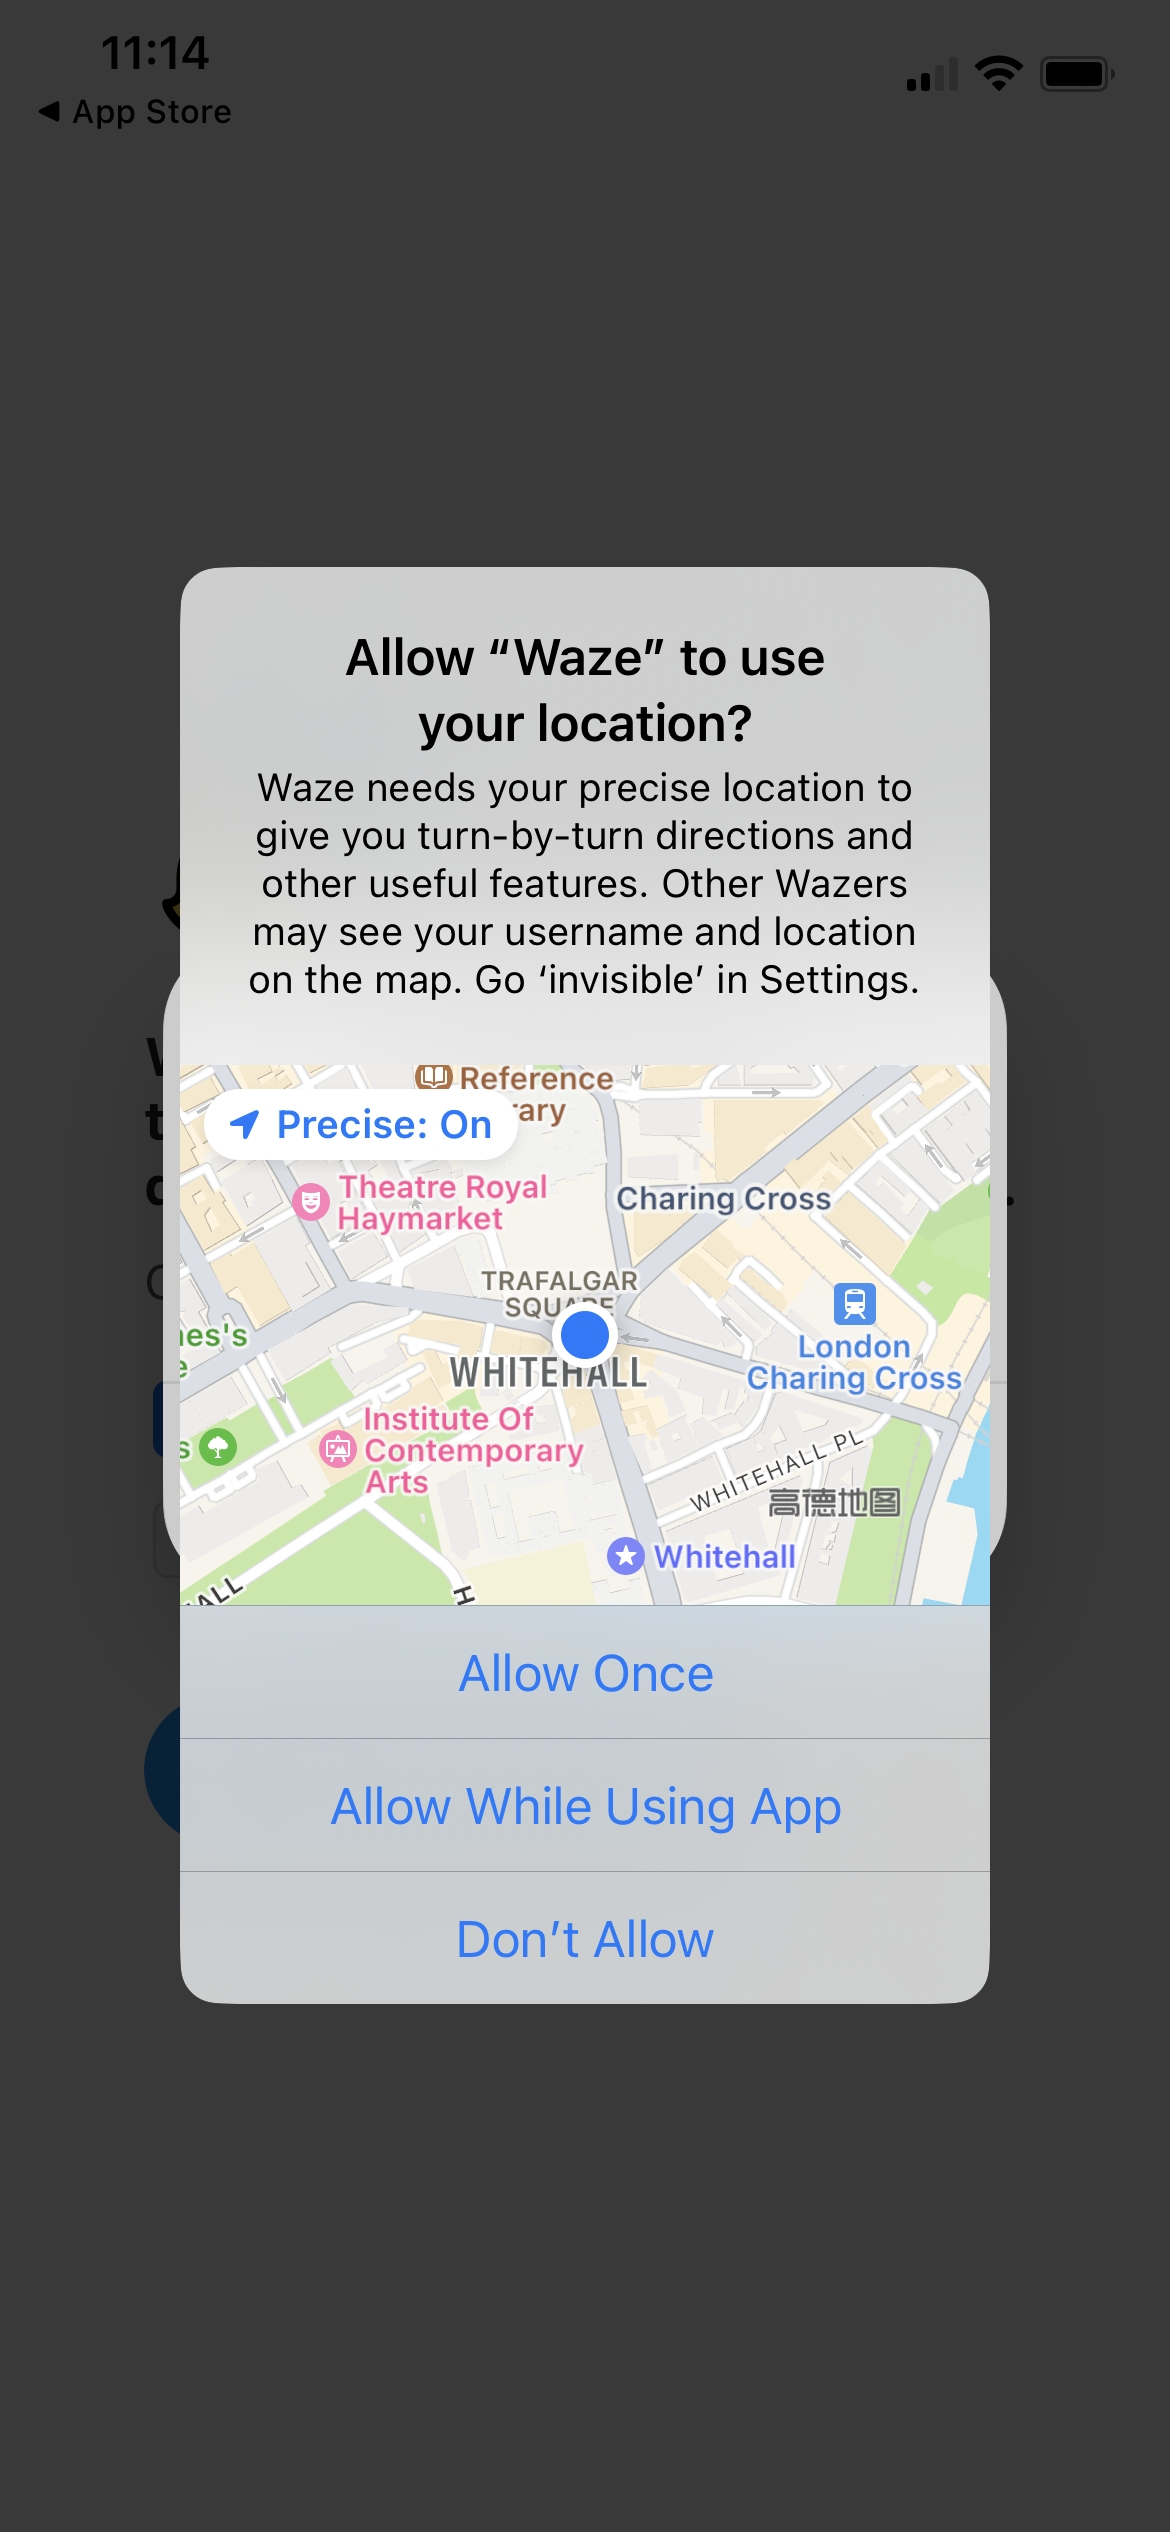 Allow Waze to use location